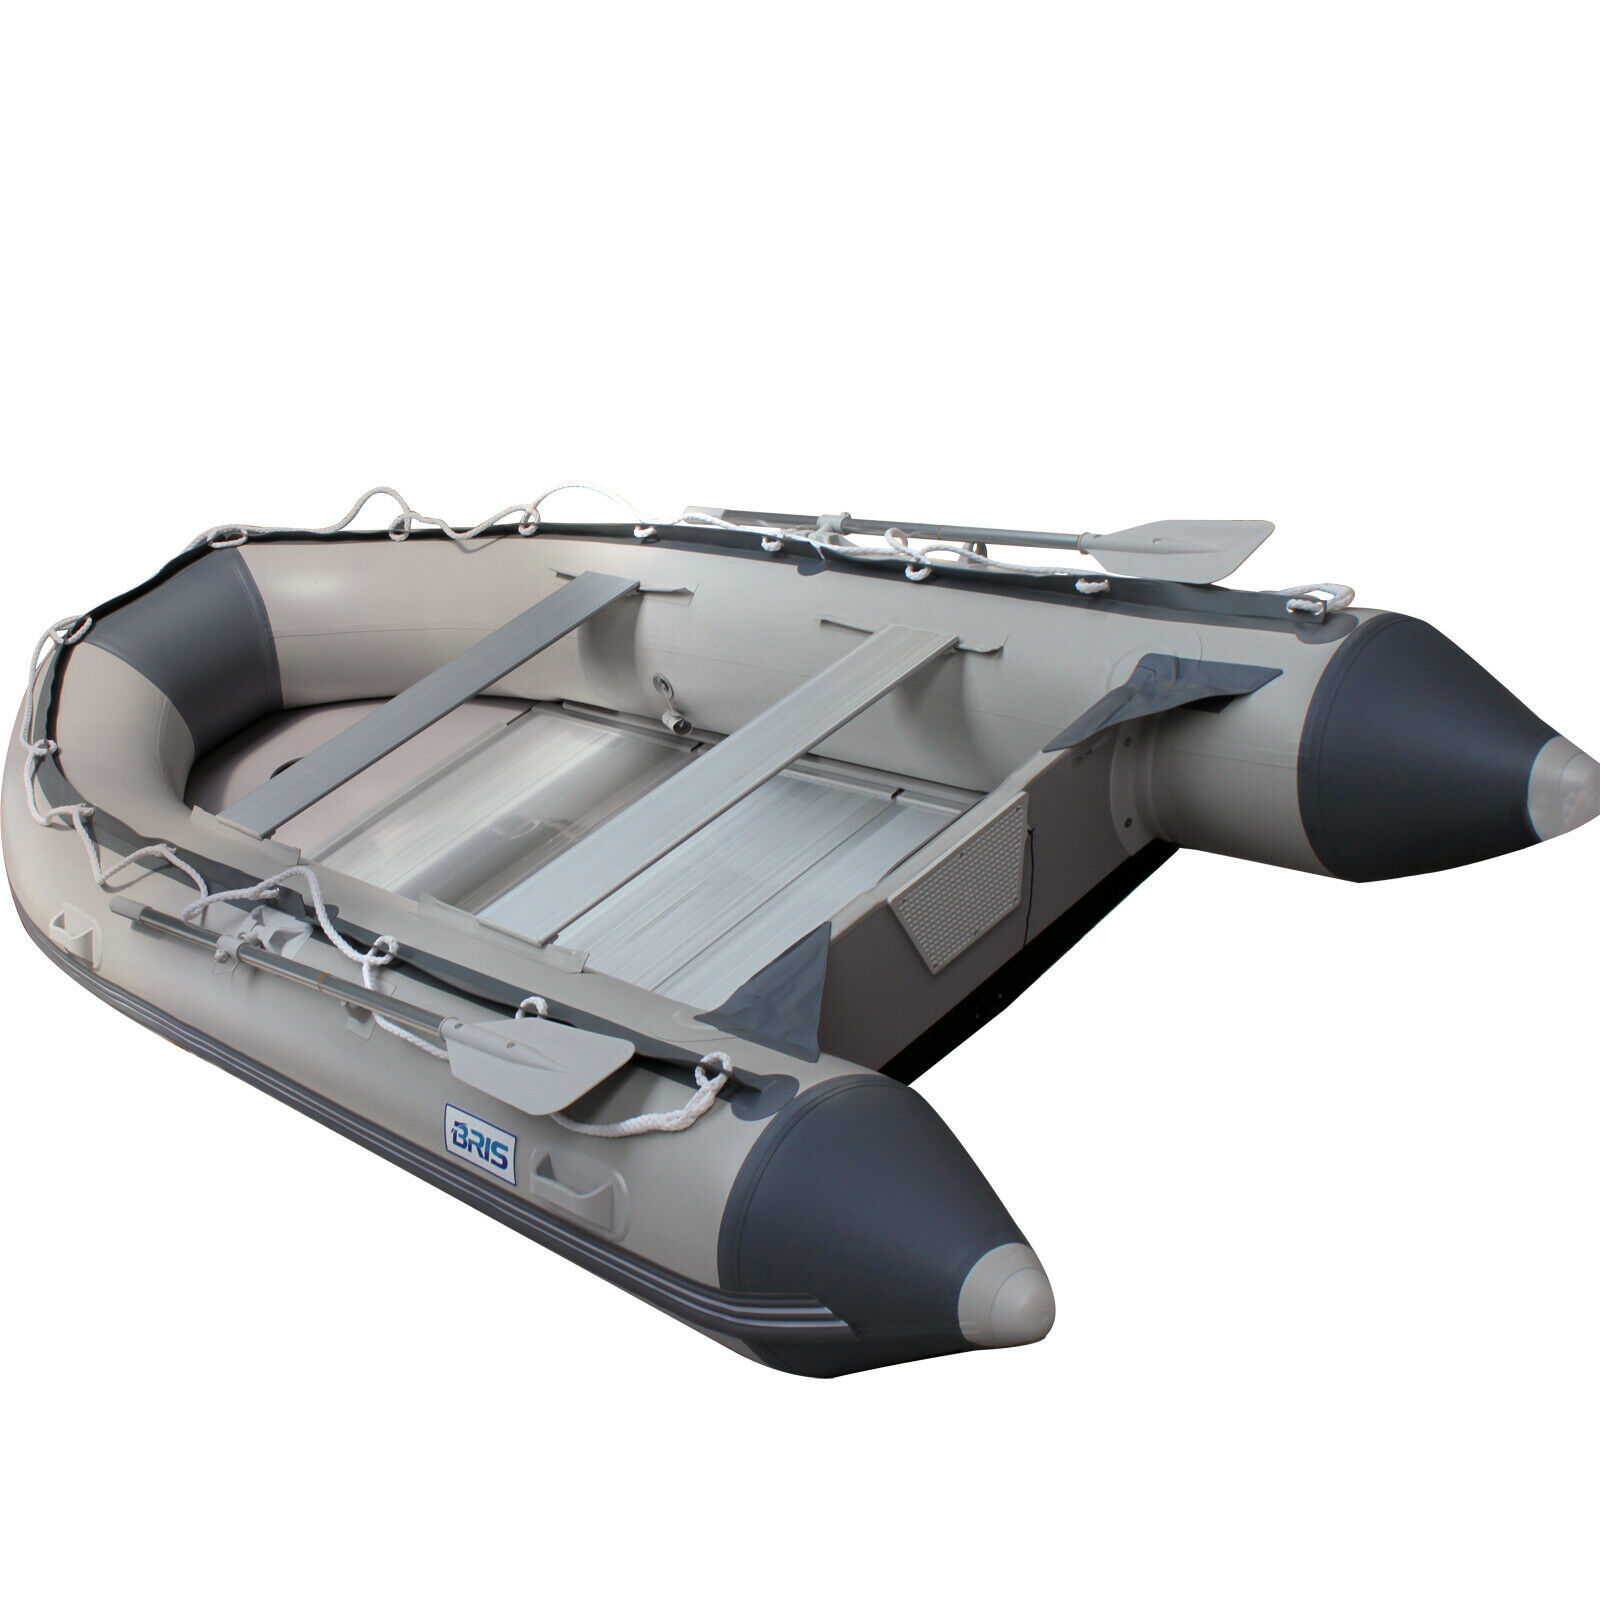 BRIS 10.8 ft Inflatable Boat Dinghy Pontoon Boat Tender Fishing